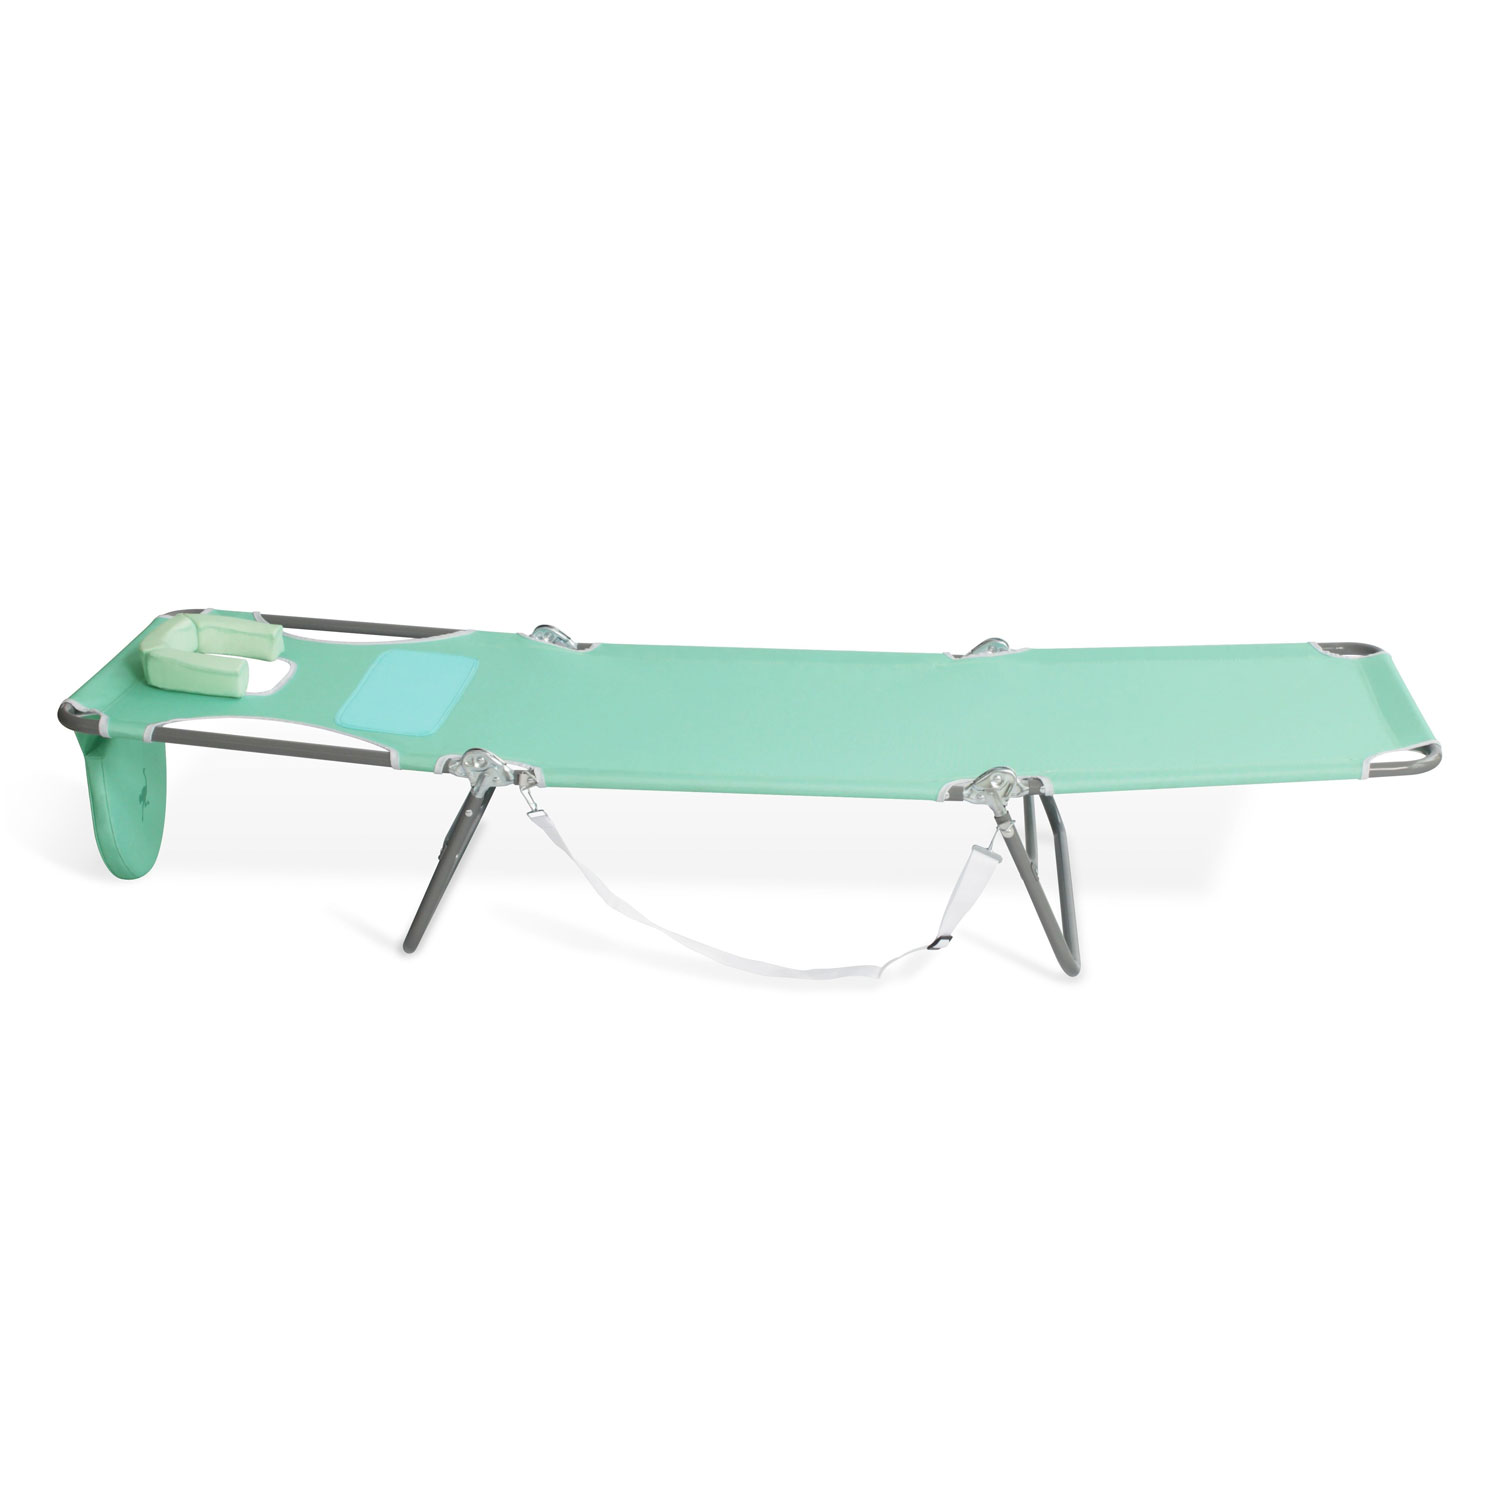 Unique Ostrich Chaise Lounge Folding Portable Sunbathing Beach Chair 